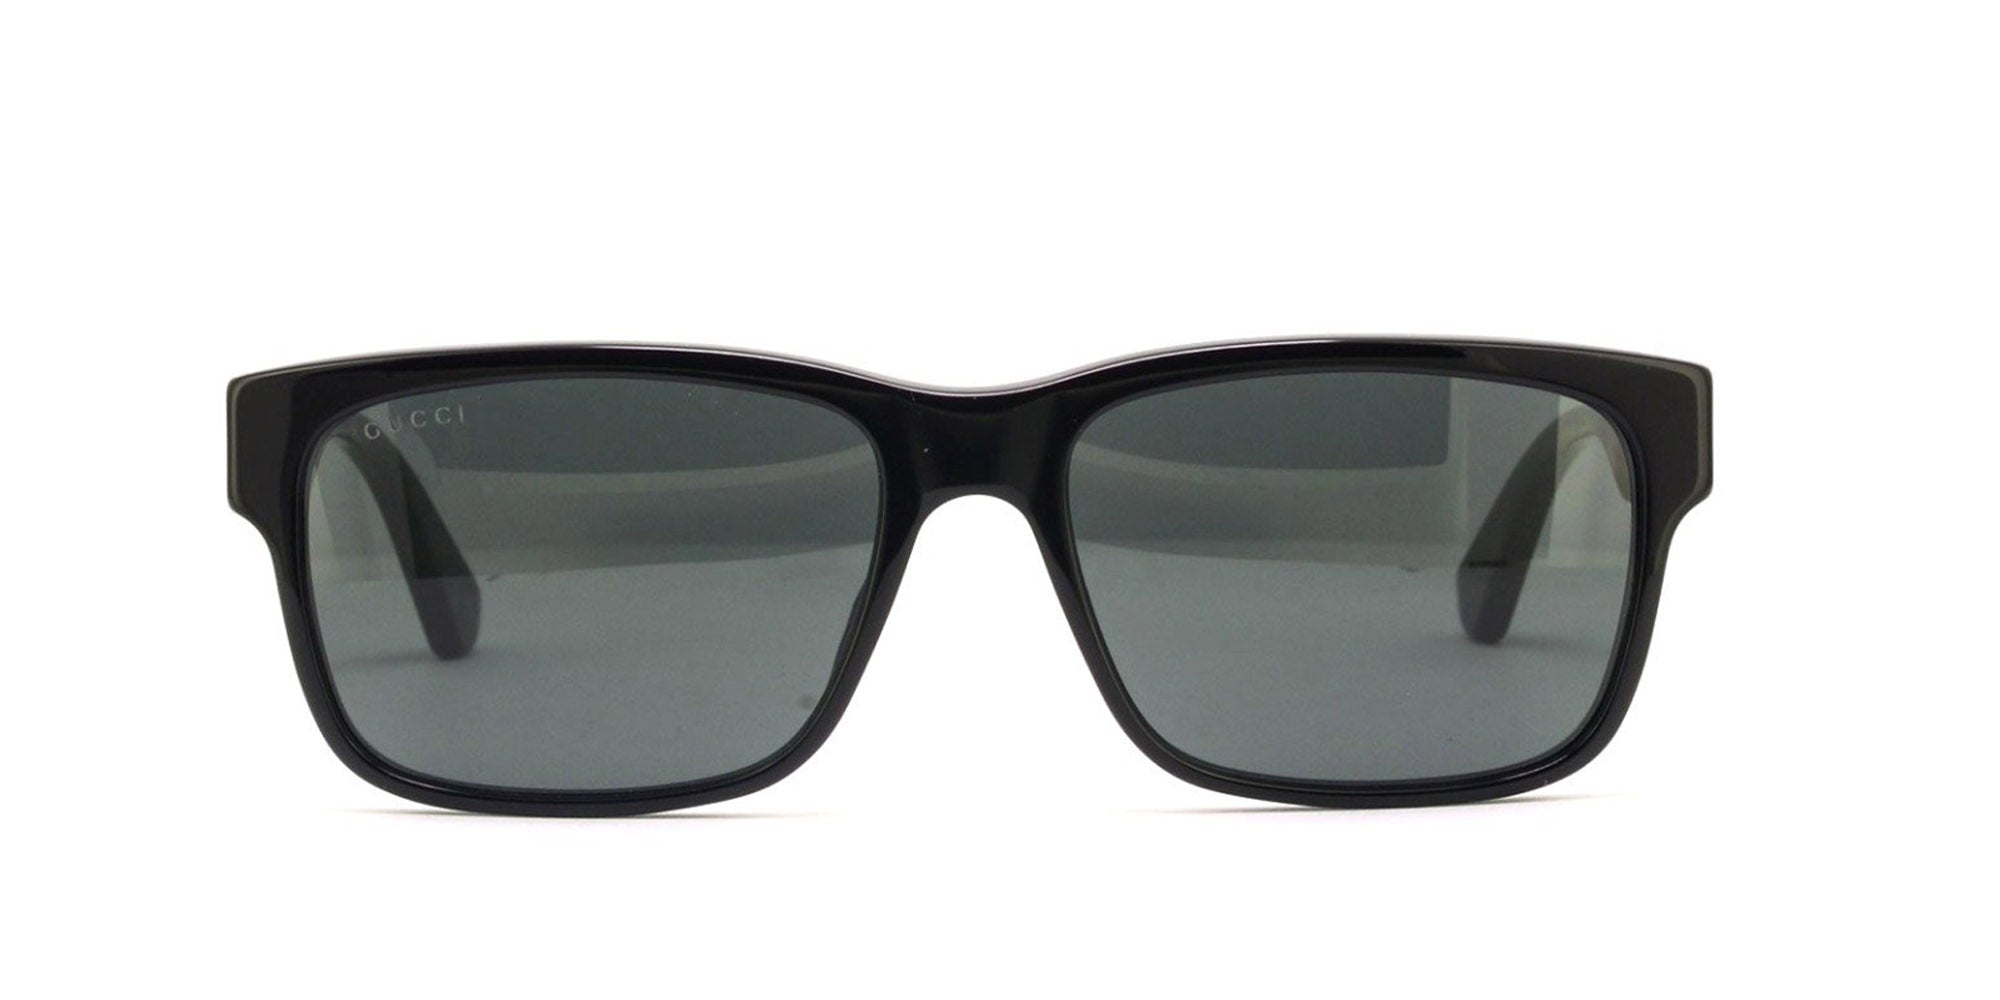 Gucci GG0340S Sunglasses | Fashion Eyewear US